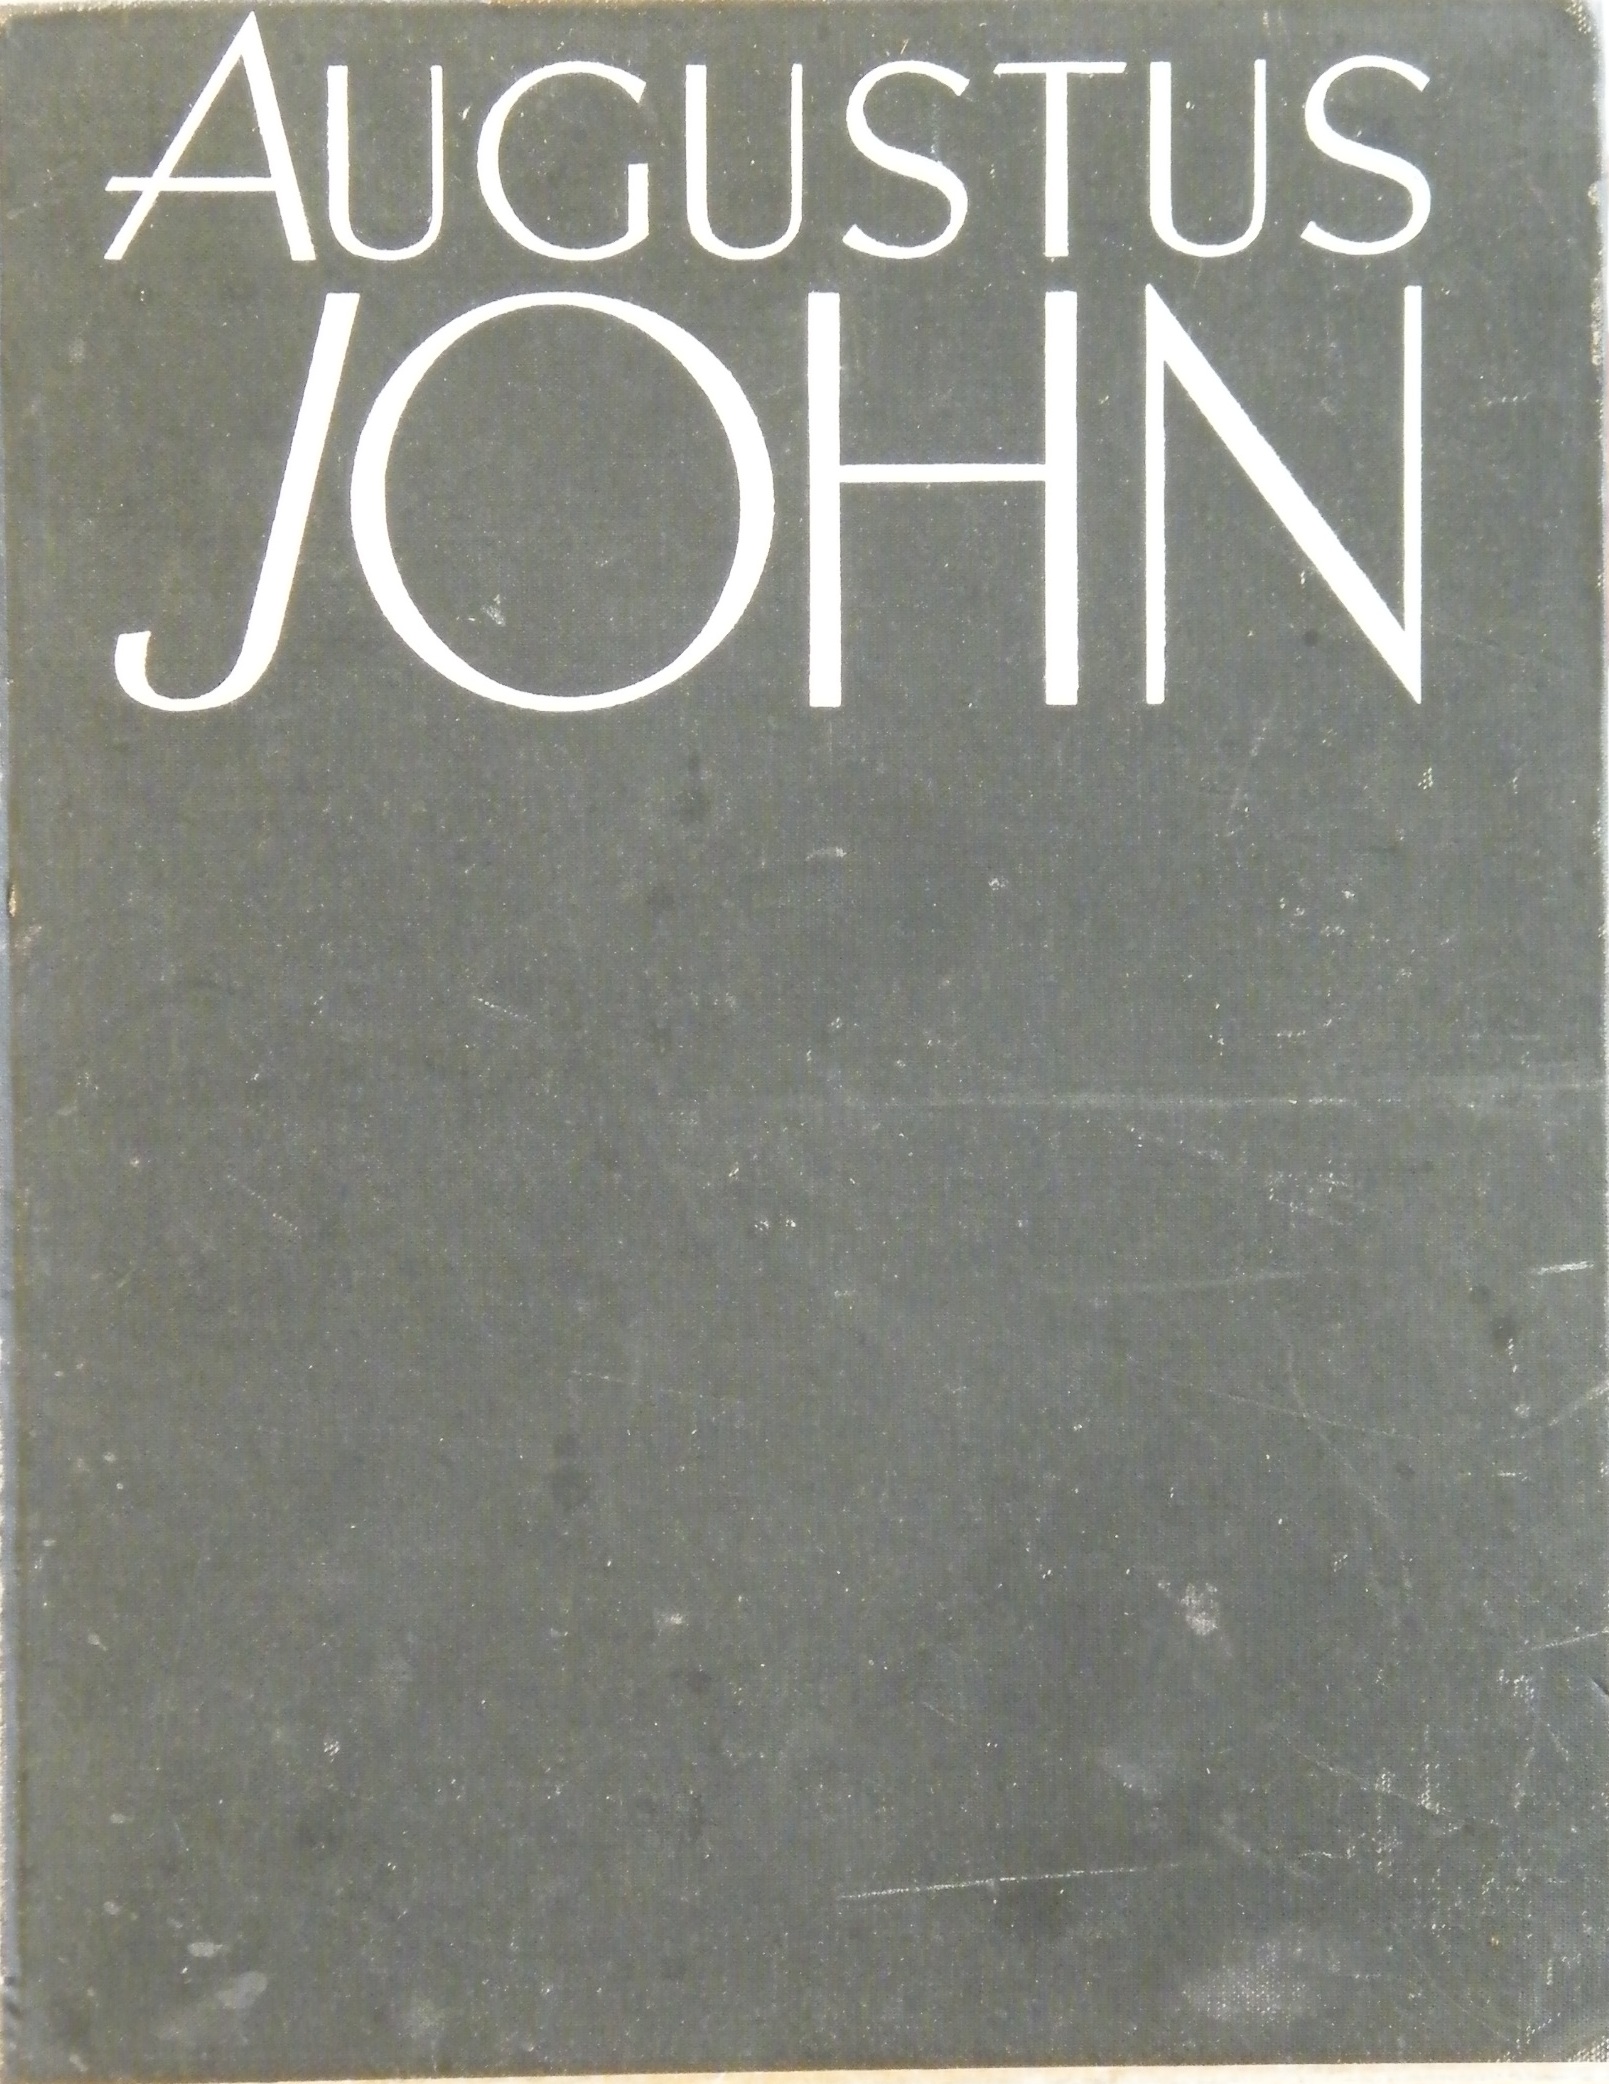 "Augustus  John"
A book by John Rothenstein.